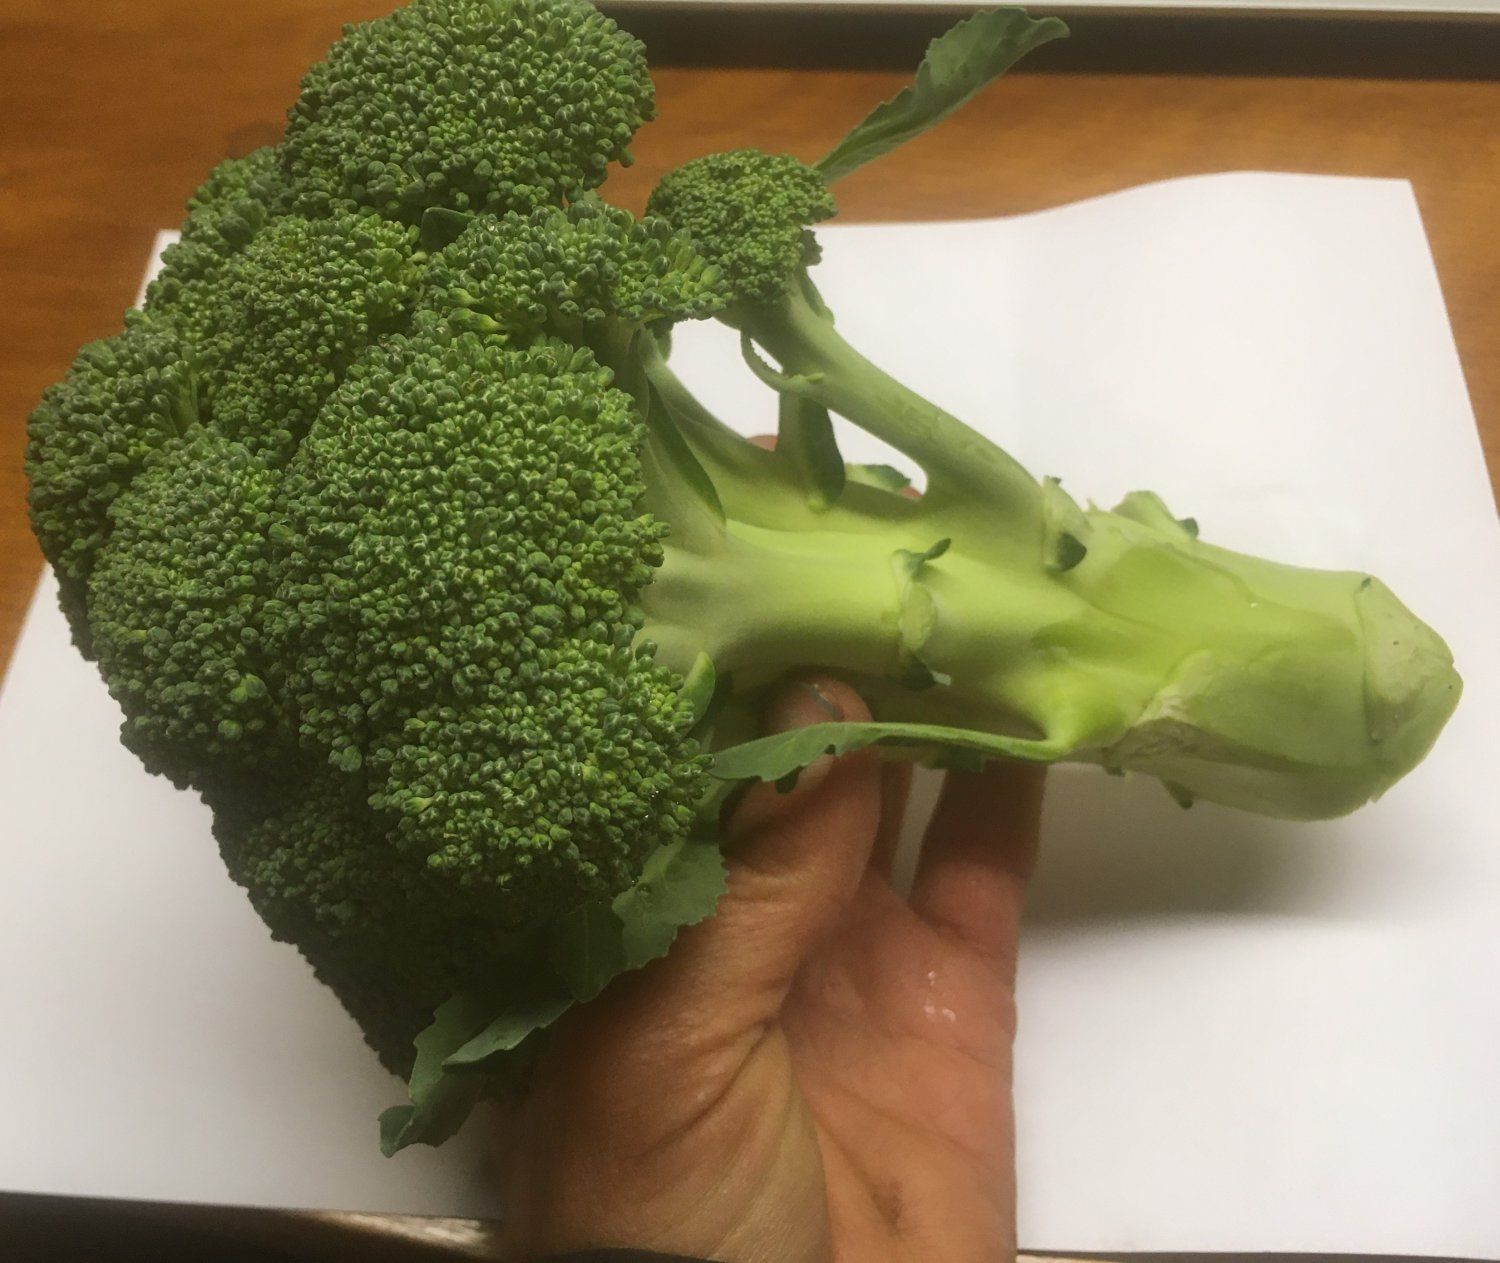 Previous Happening: Farm Happenings for November 20, 2021: Broccoli and Garlic